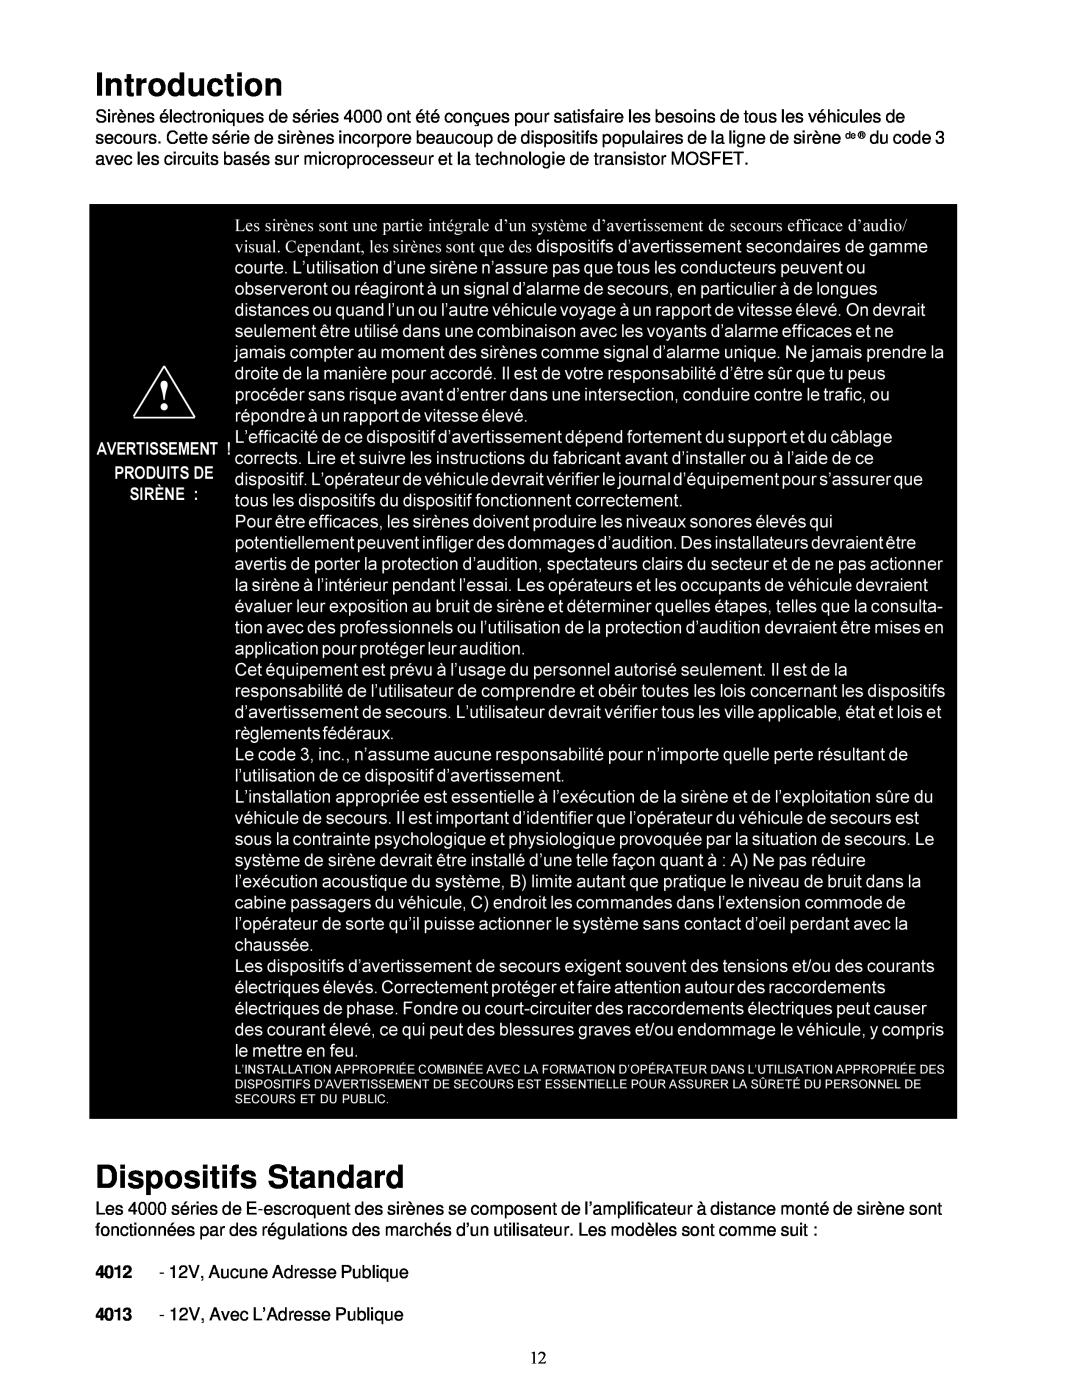 Bosch Appliances 4000 operation manual Introduction, Dispositifs Standard, Sirène 